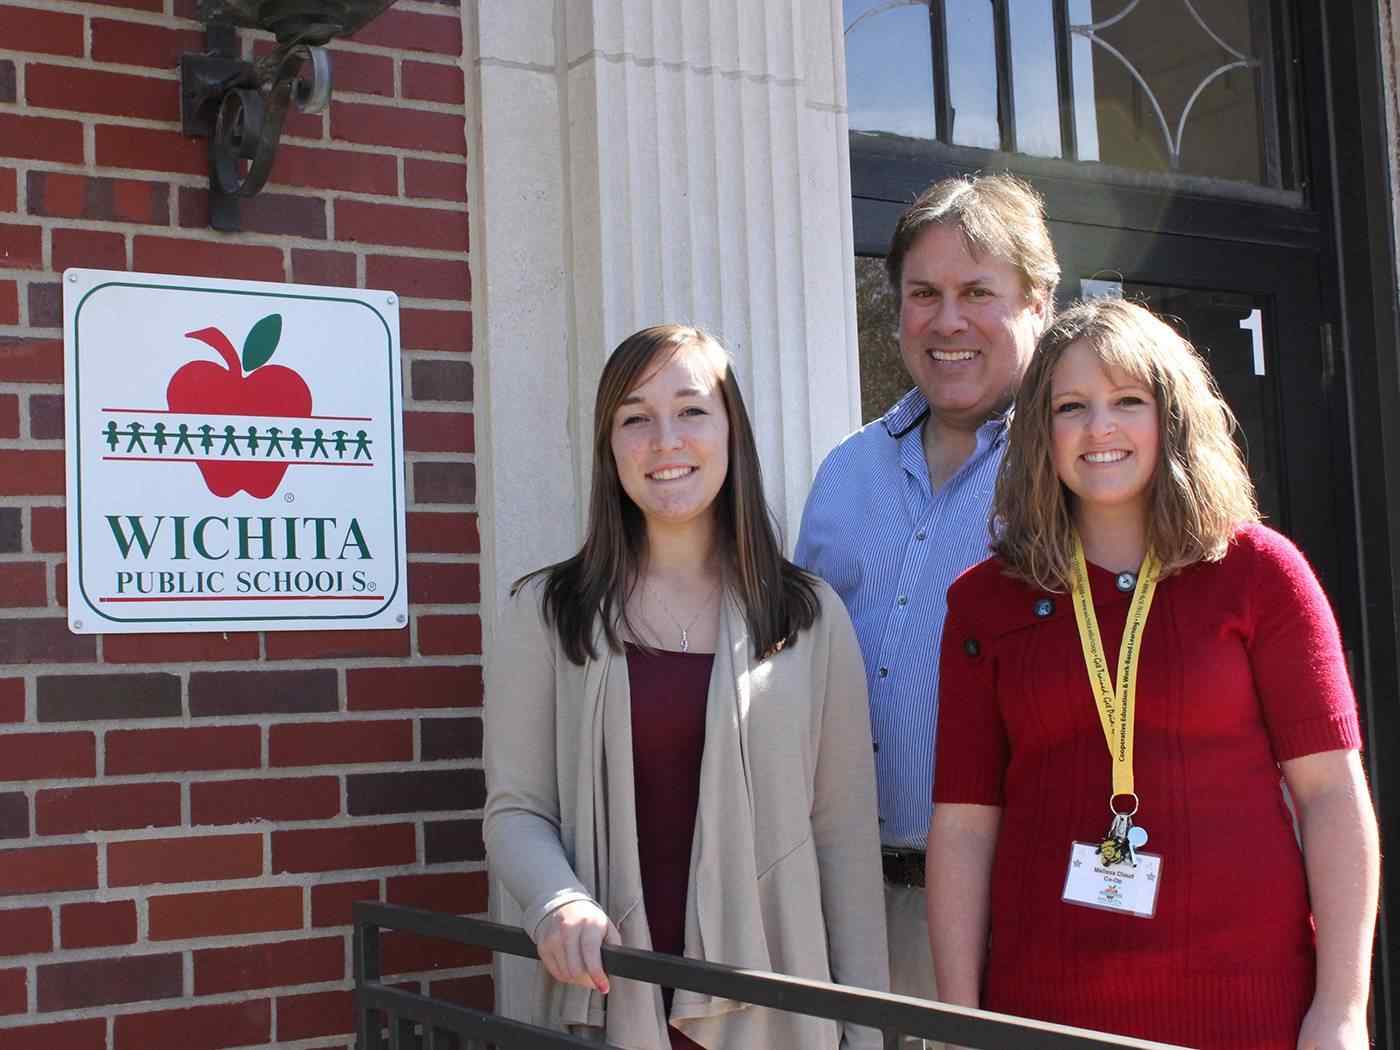 Three teacher education majors pose in front of a Wichita Public Schools building